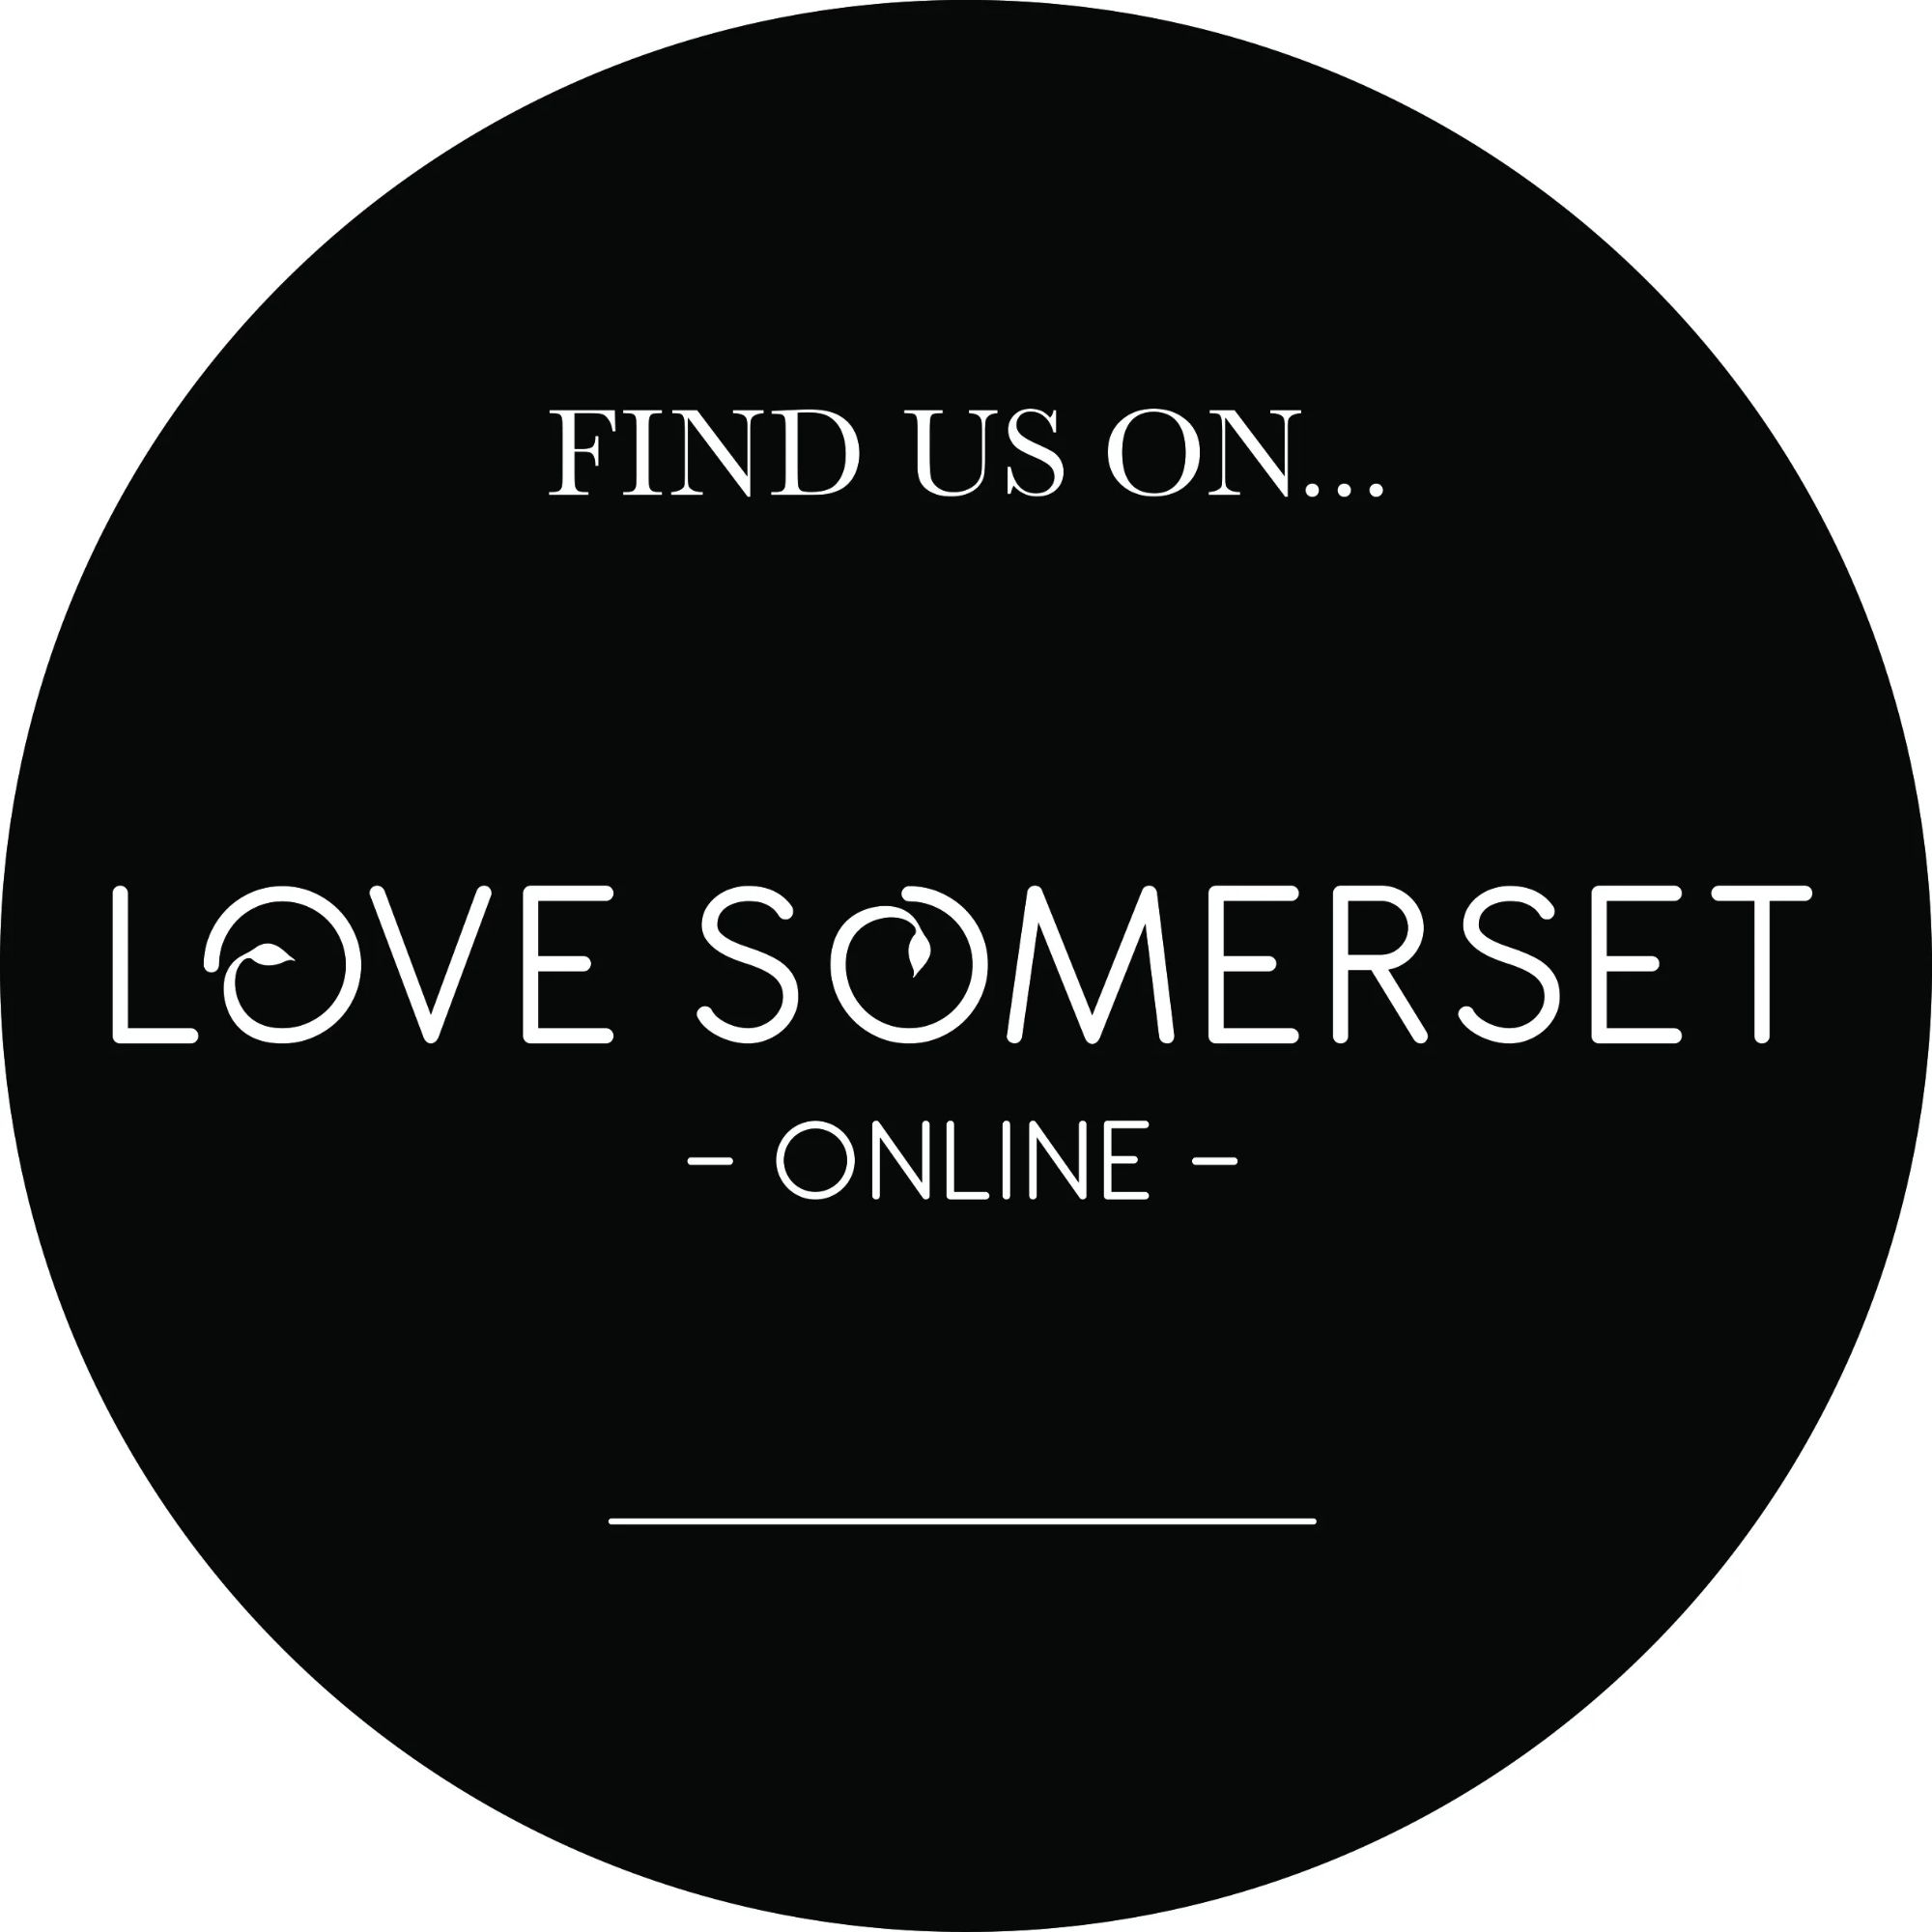 Find us on Love Somerset Online